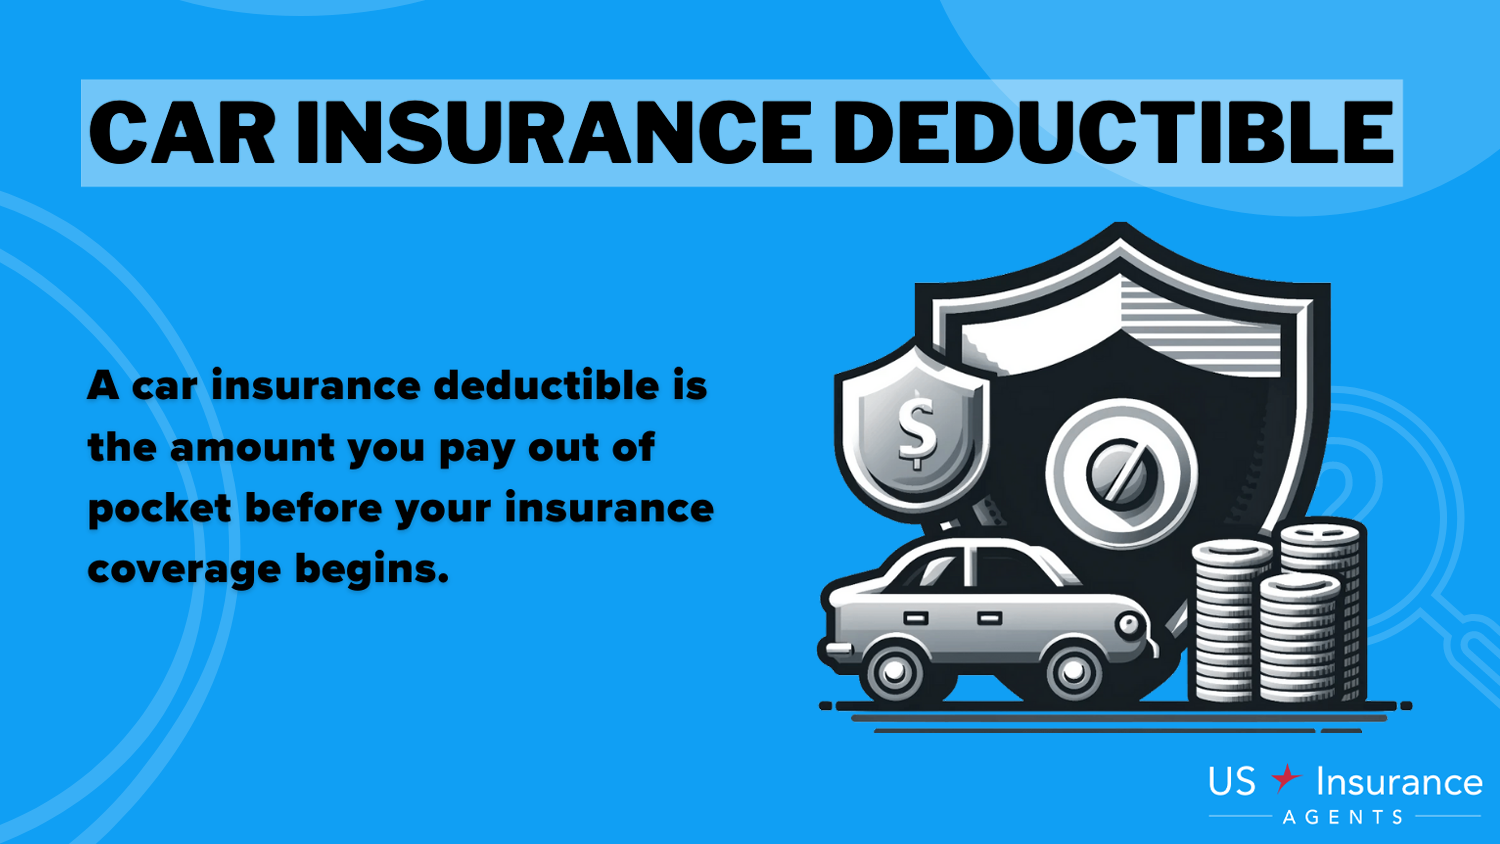 US Insurance Agents Cheap Ram C/V Car Insurance Deductible 